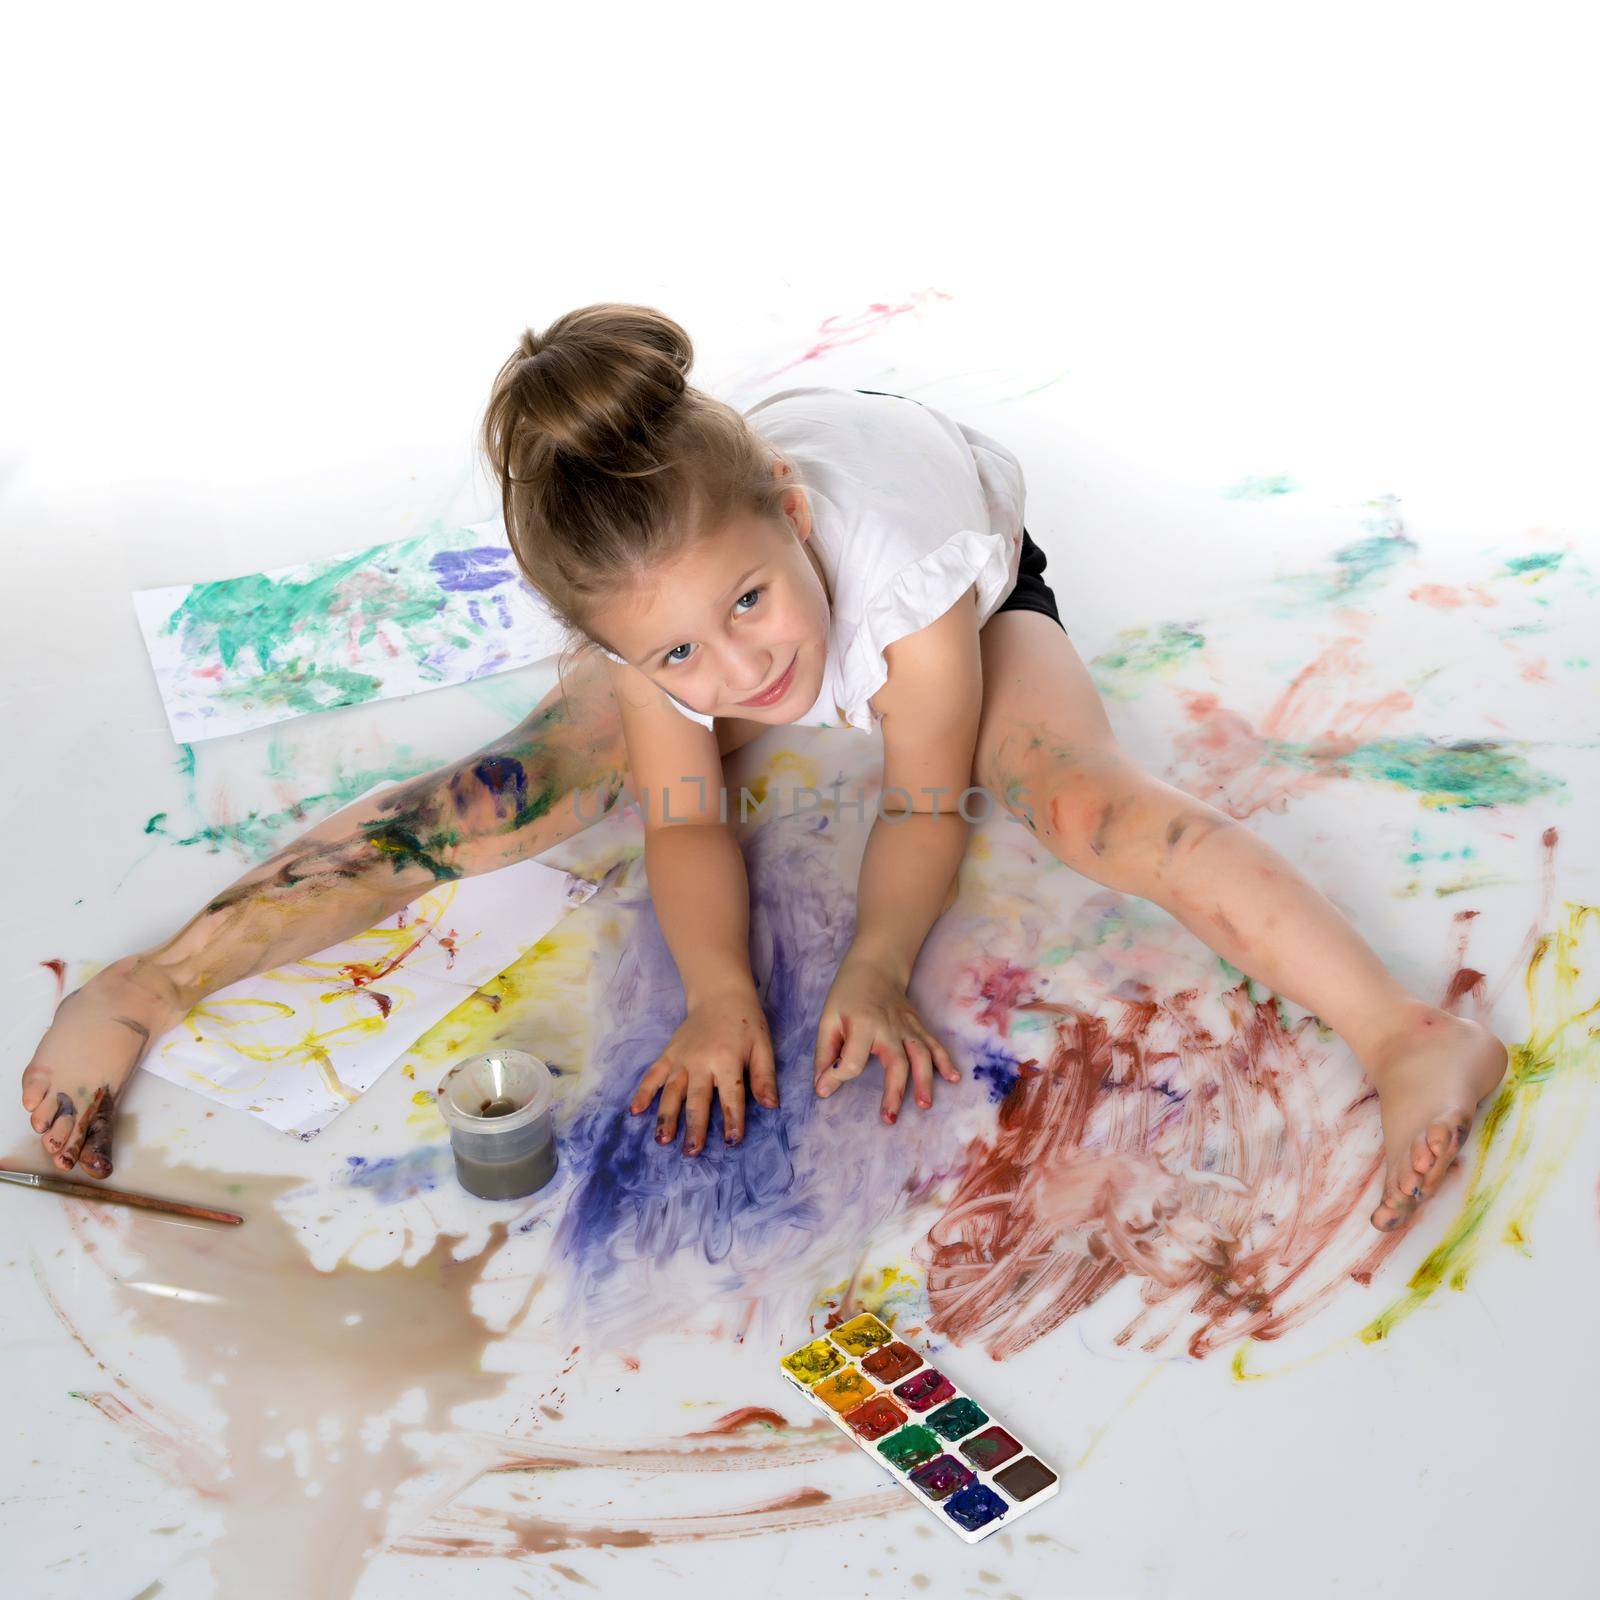 A little girl draws paints on her body by kolesnikov_studio